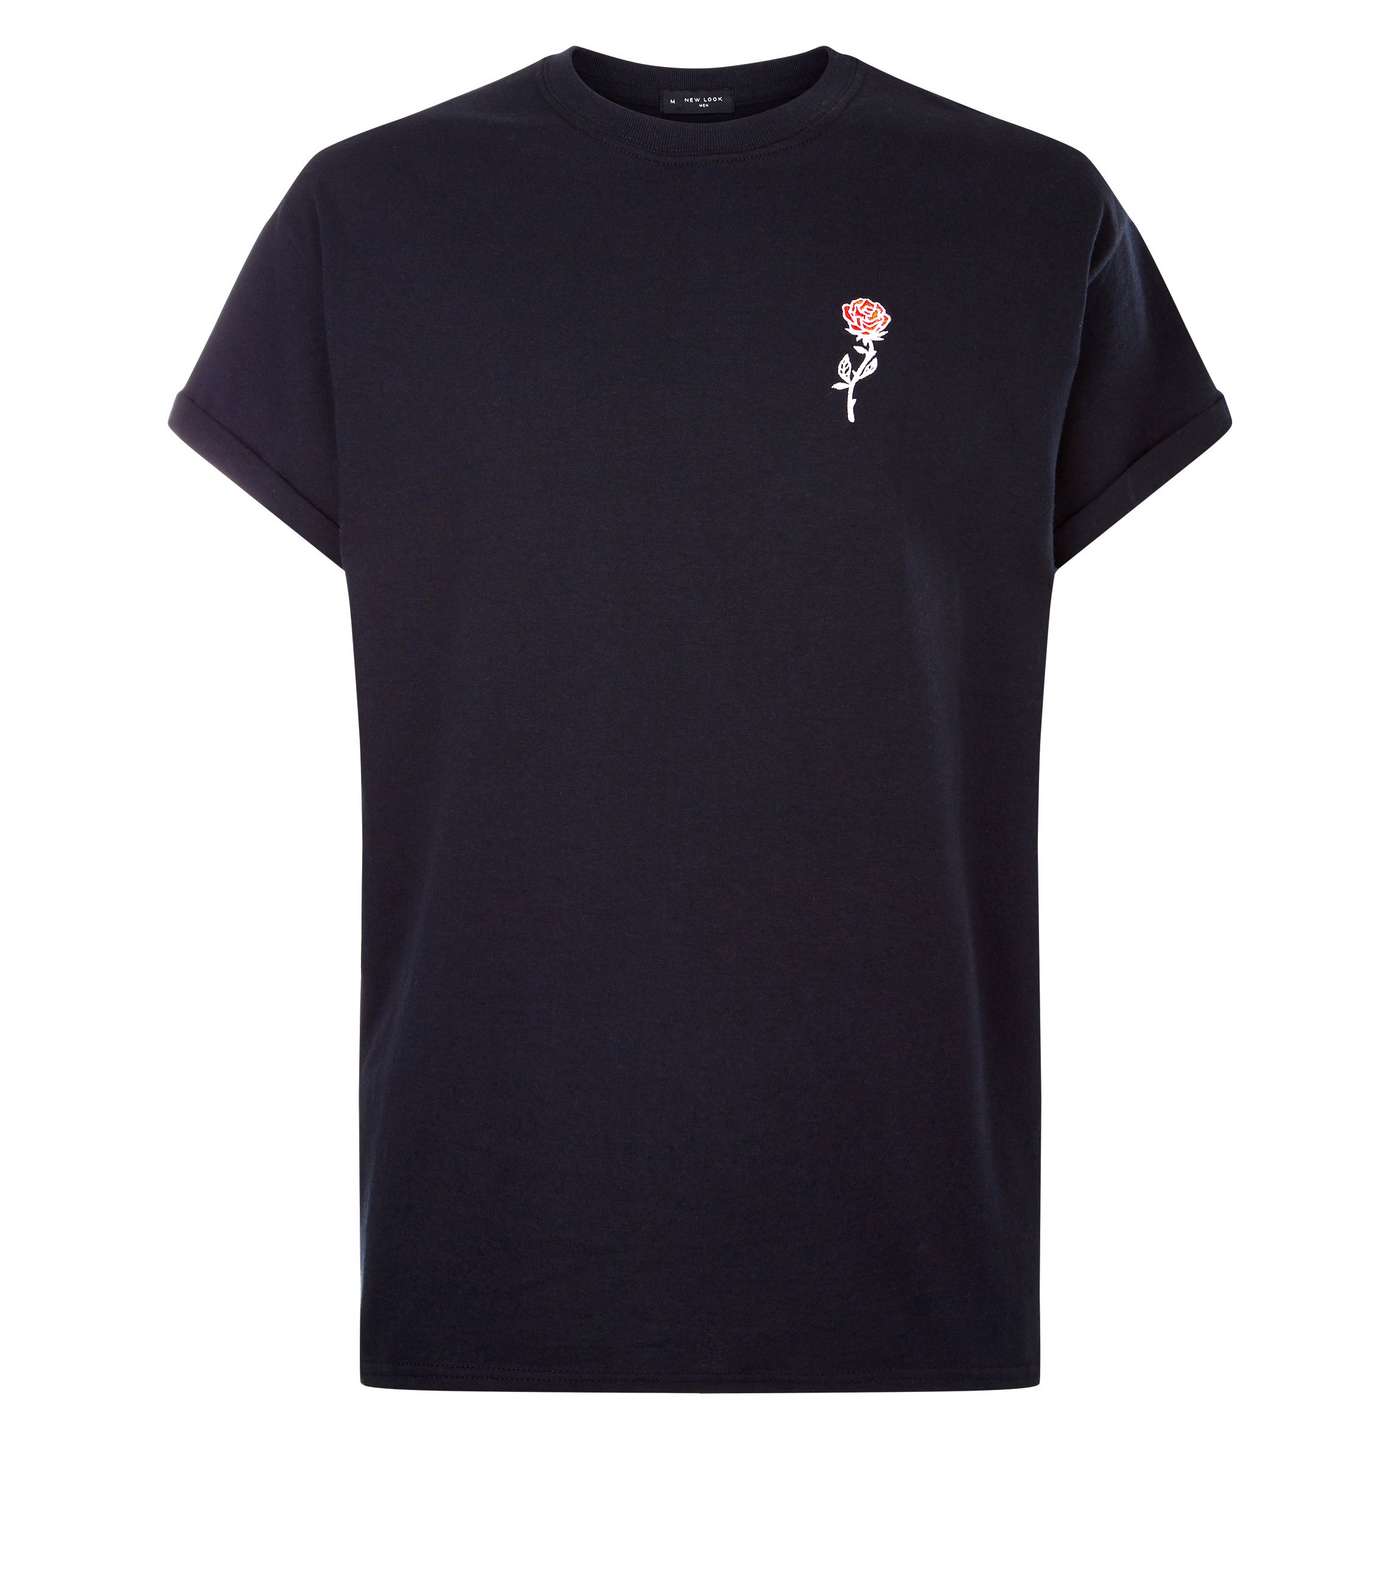 Black Embroidered Rose T-Shirt Image 4